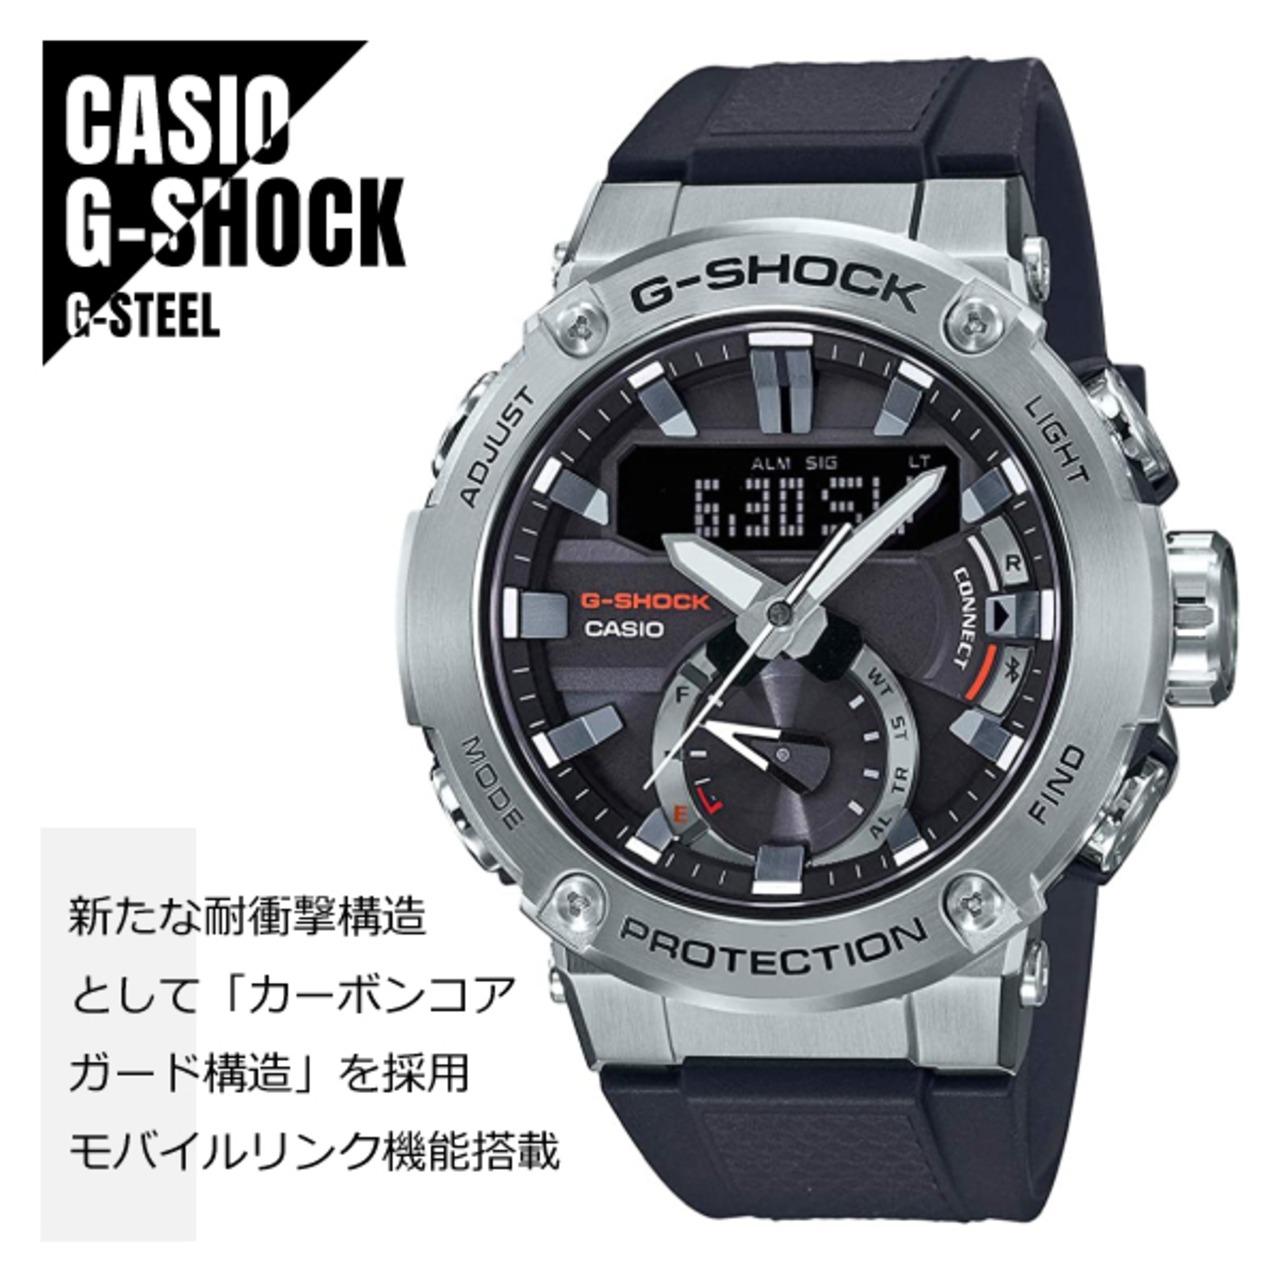 CASIO カシオ G-SHOCK Gショック G-STEEL Gスチール カーボンコアガード構造 モバイルリンク タフソーラー GST-B200-1A ブラック 腕時計 メンズ